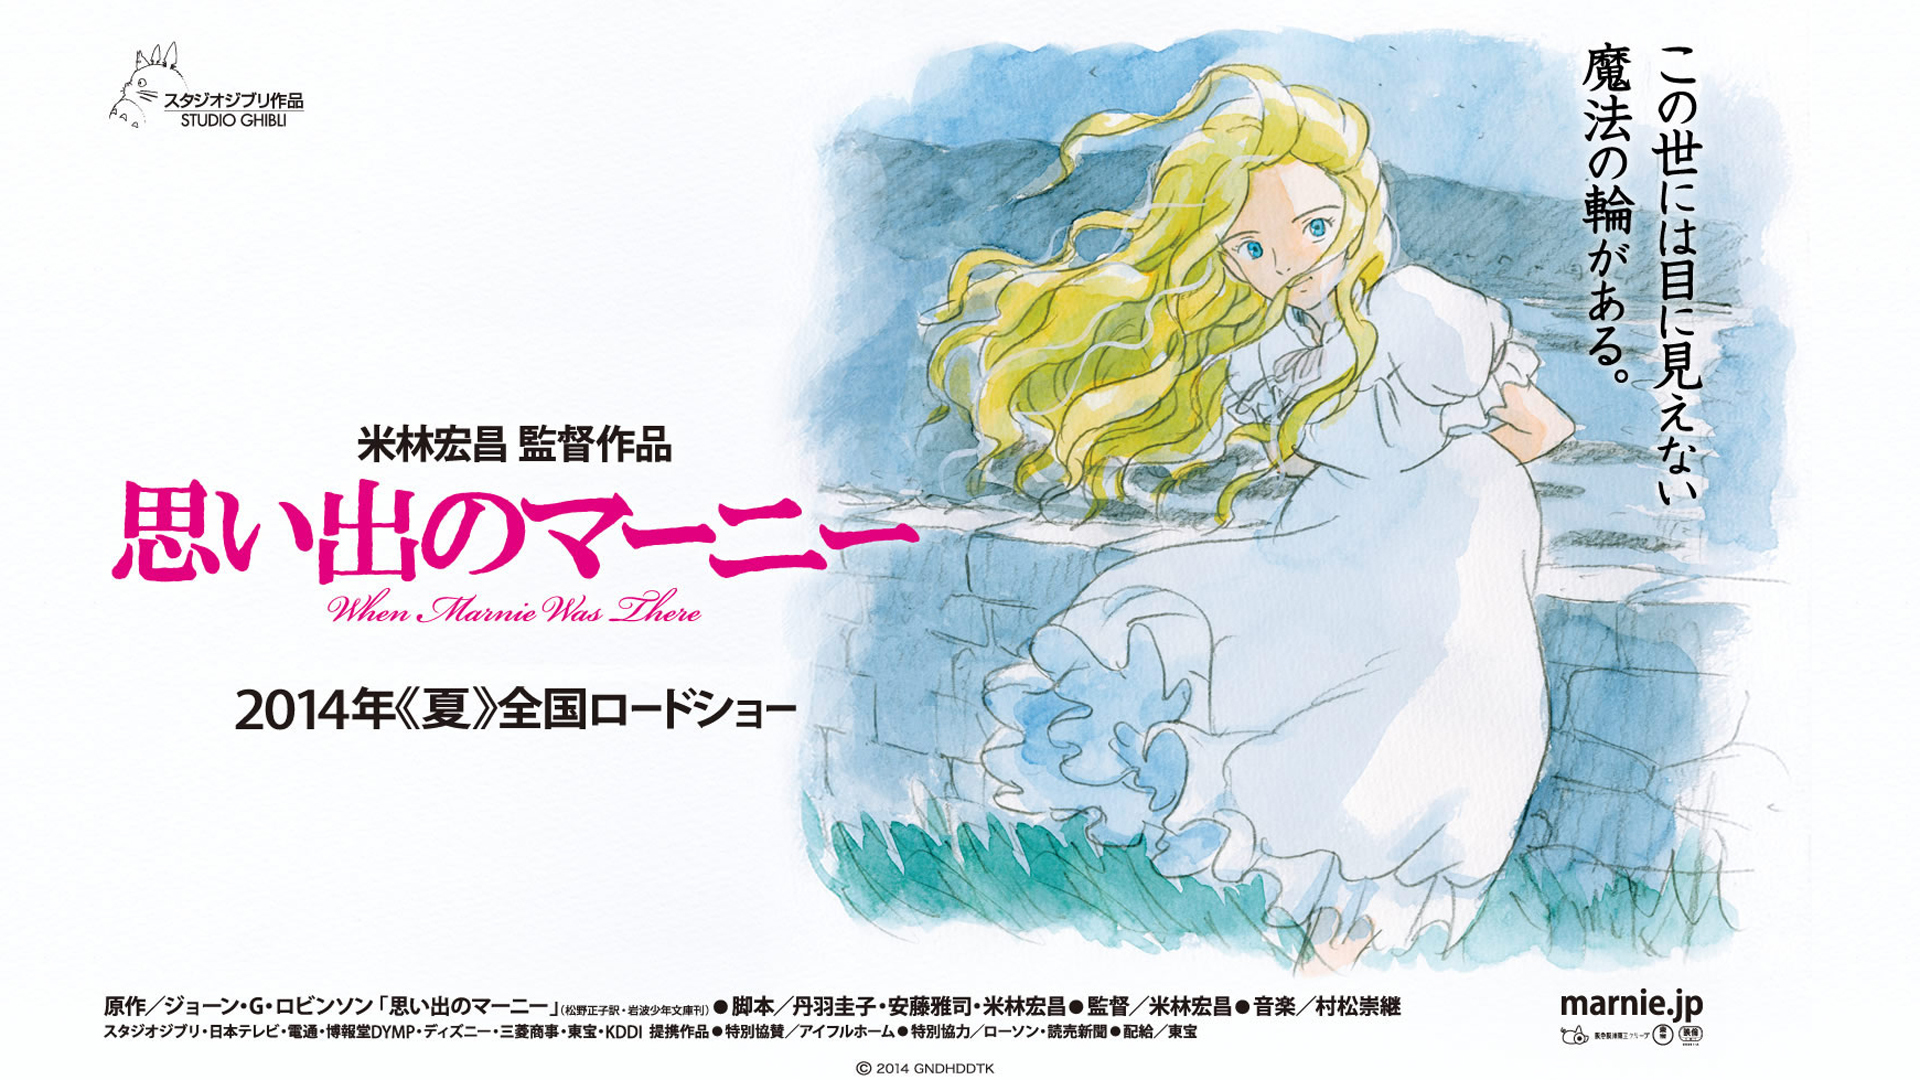 New Movie Of Studio Ghibli - HD Wallpaper 